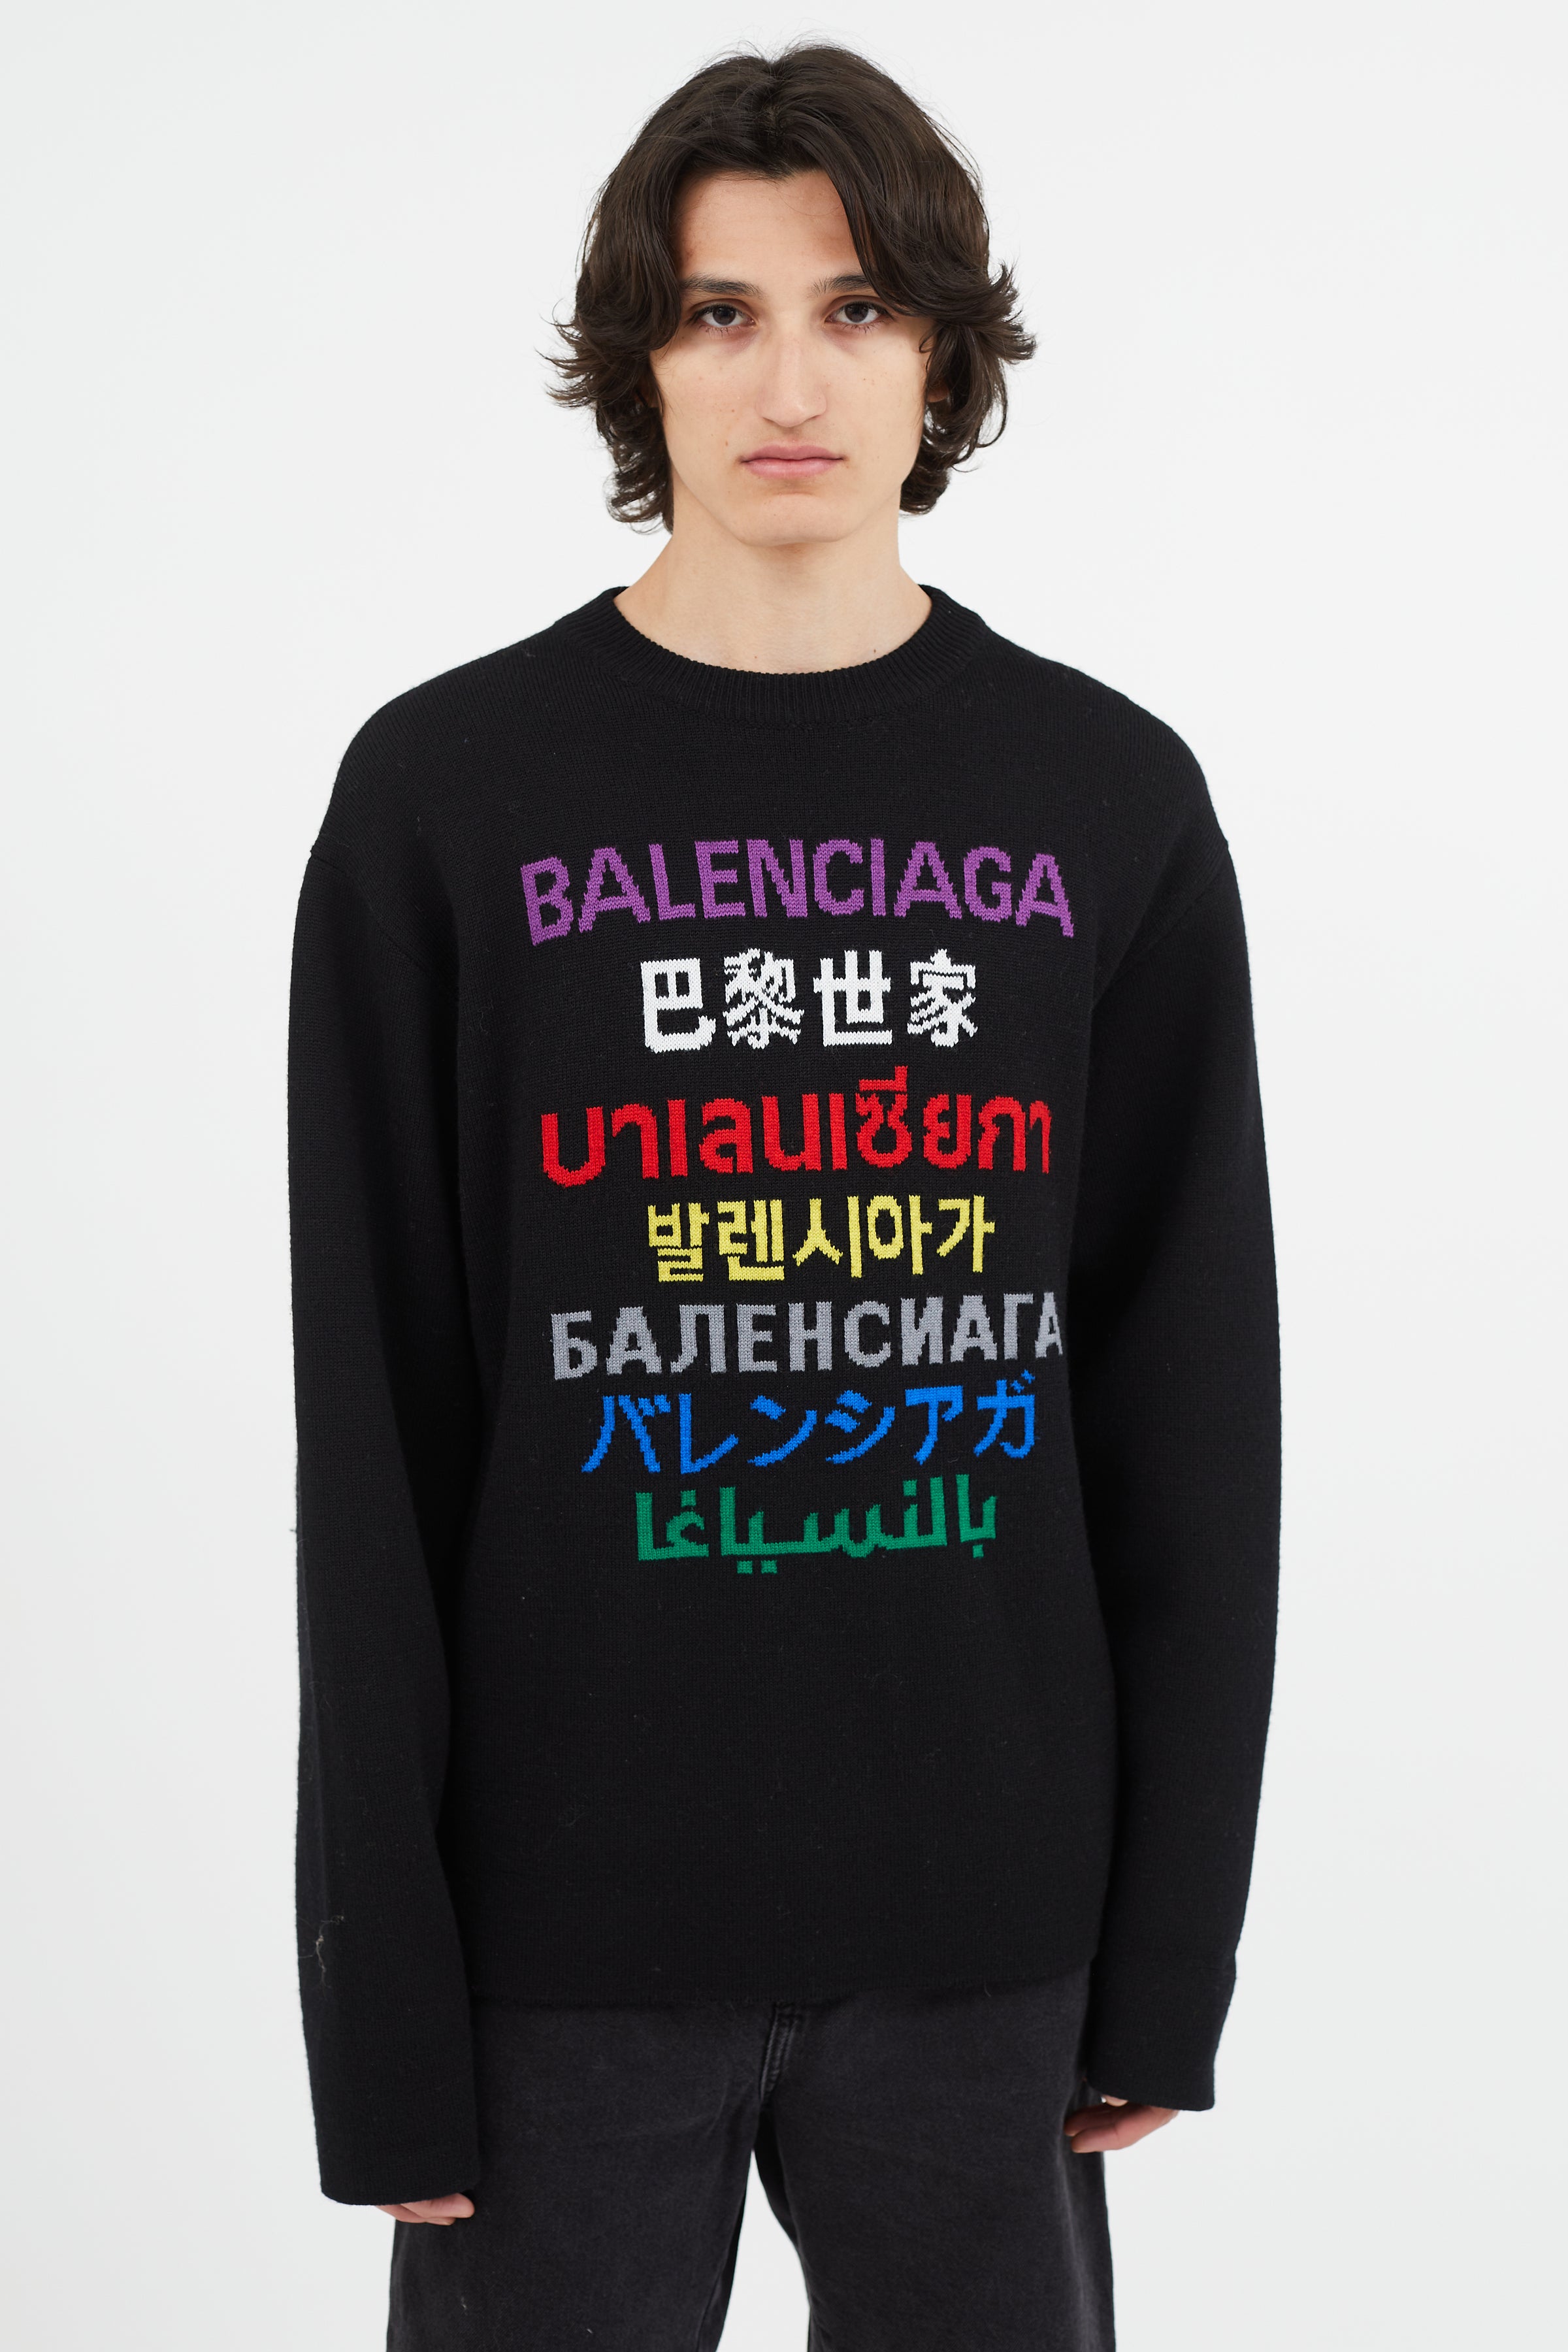 Balenciaga Multilanguages Shirt Luxury Apparel on Carousell